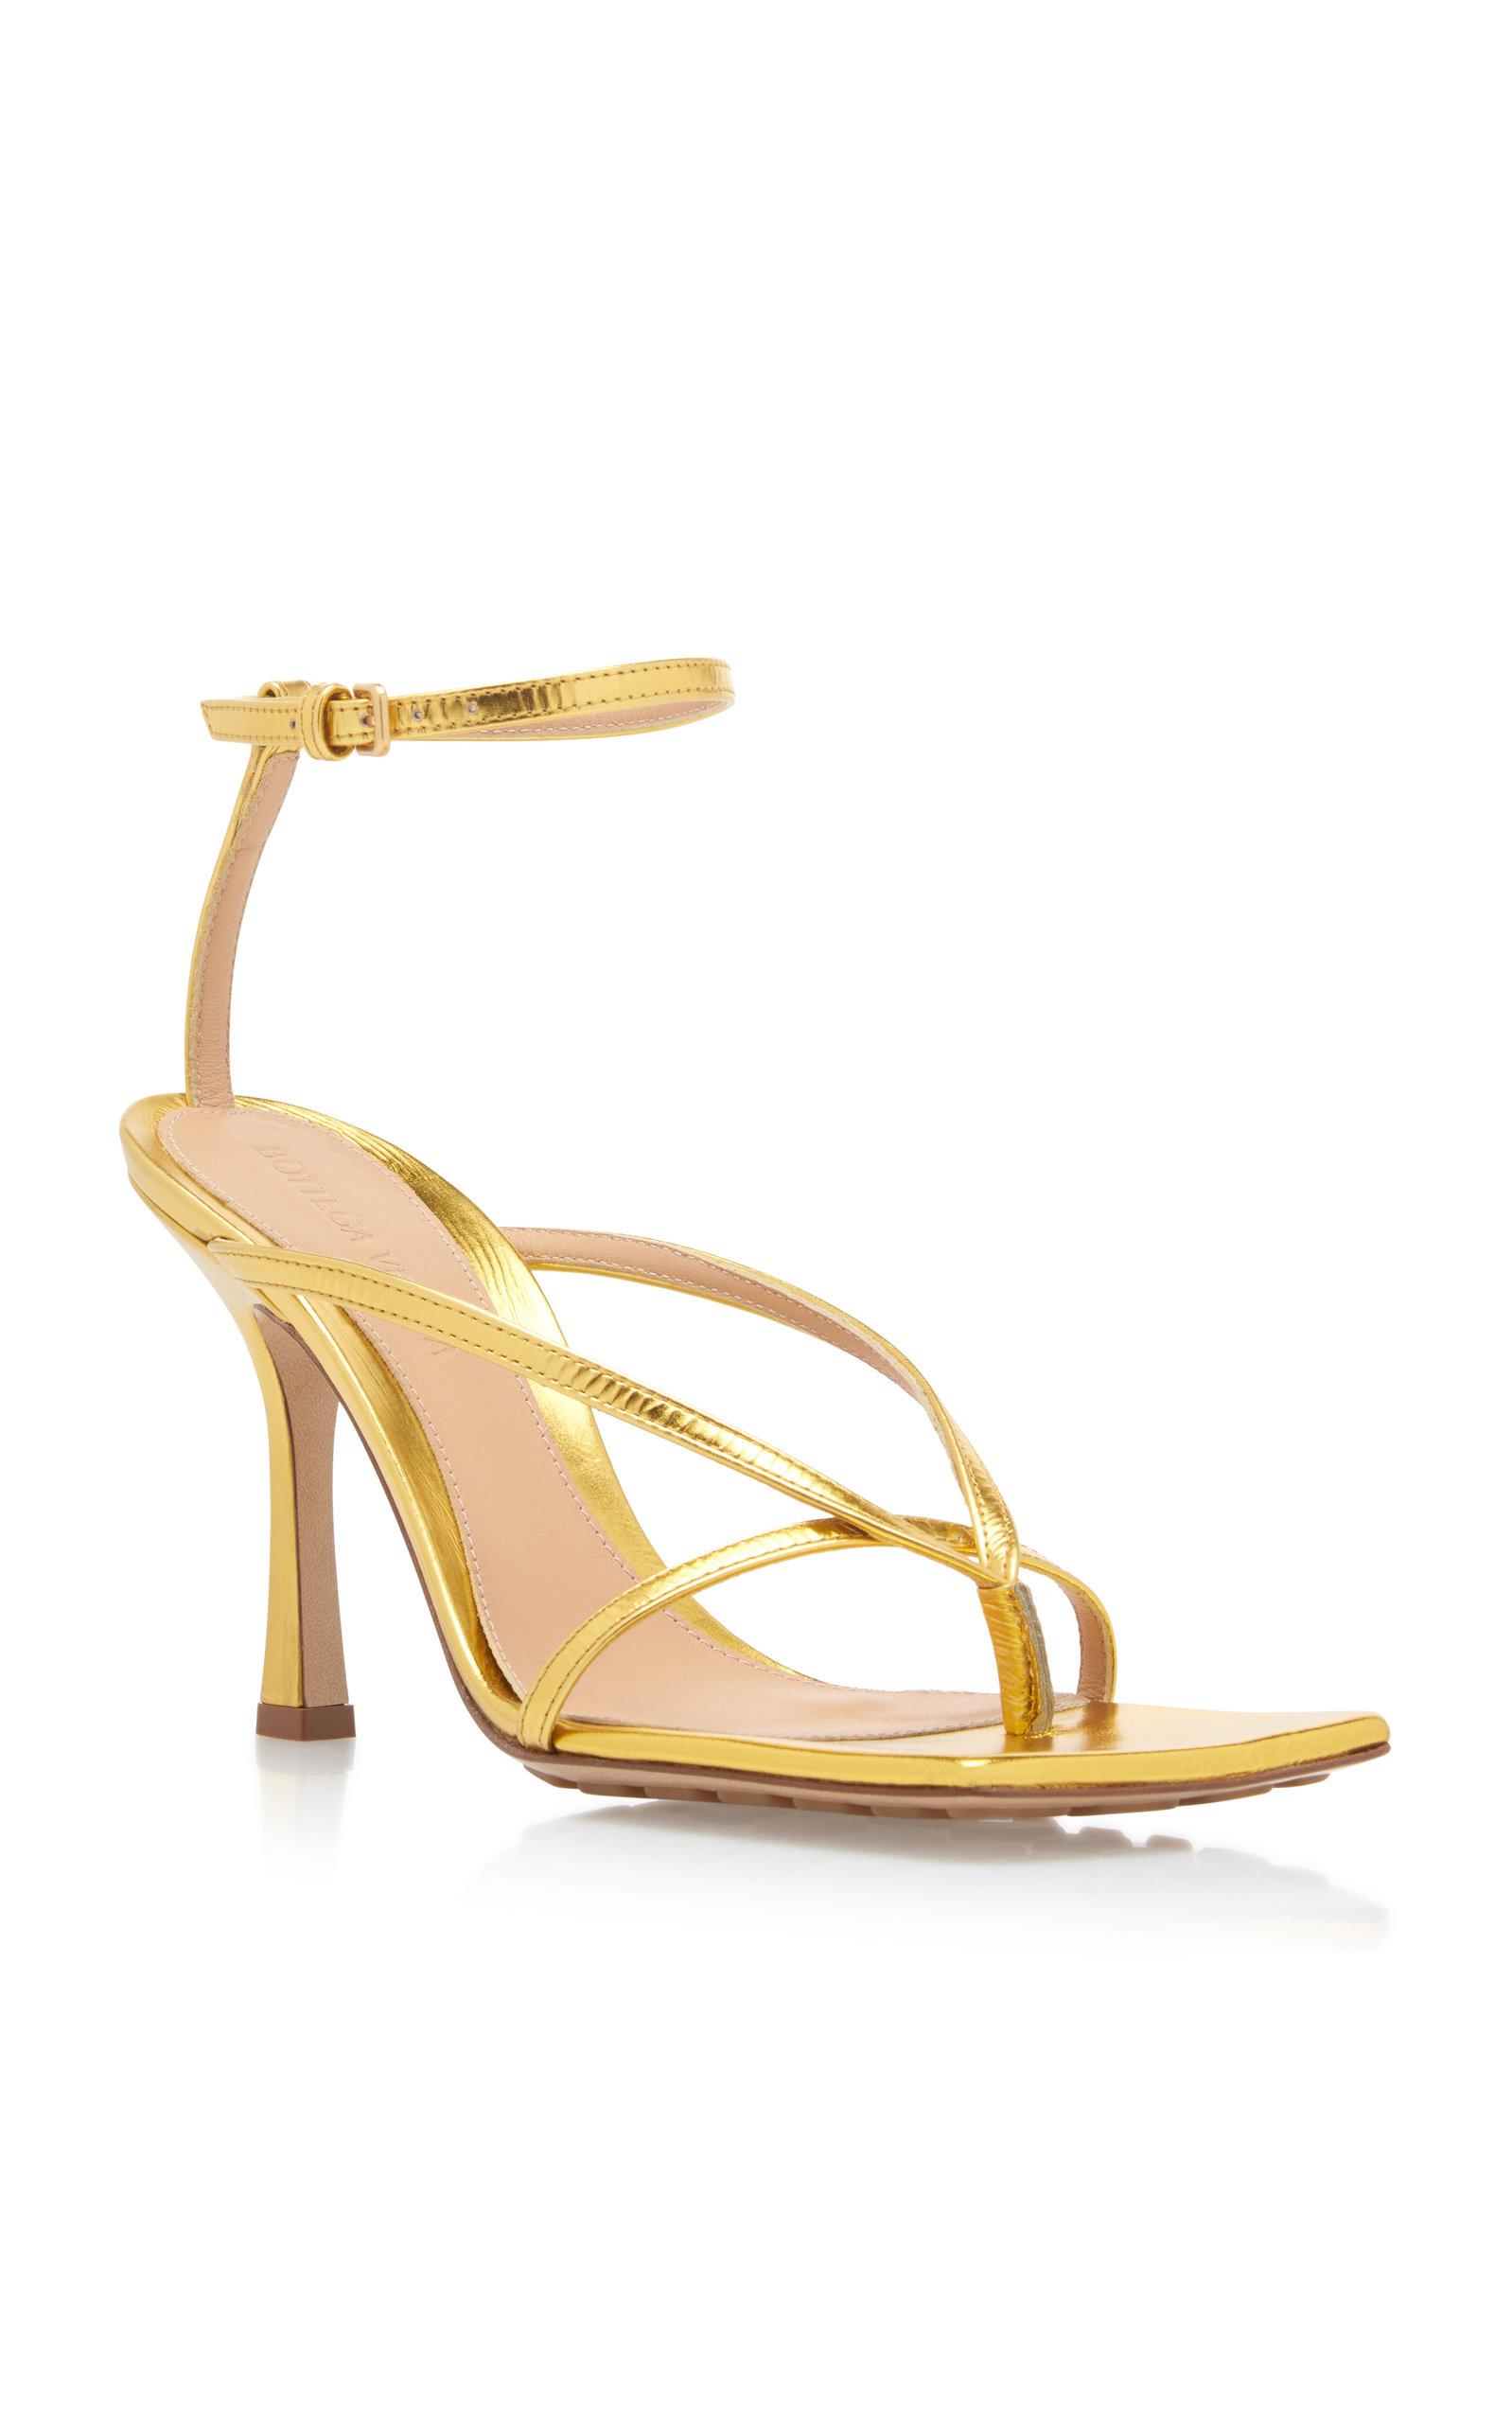 Bottega Veneta Leather Stretch Sandals in Gold (Metallic) - Lyst